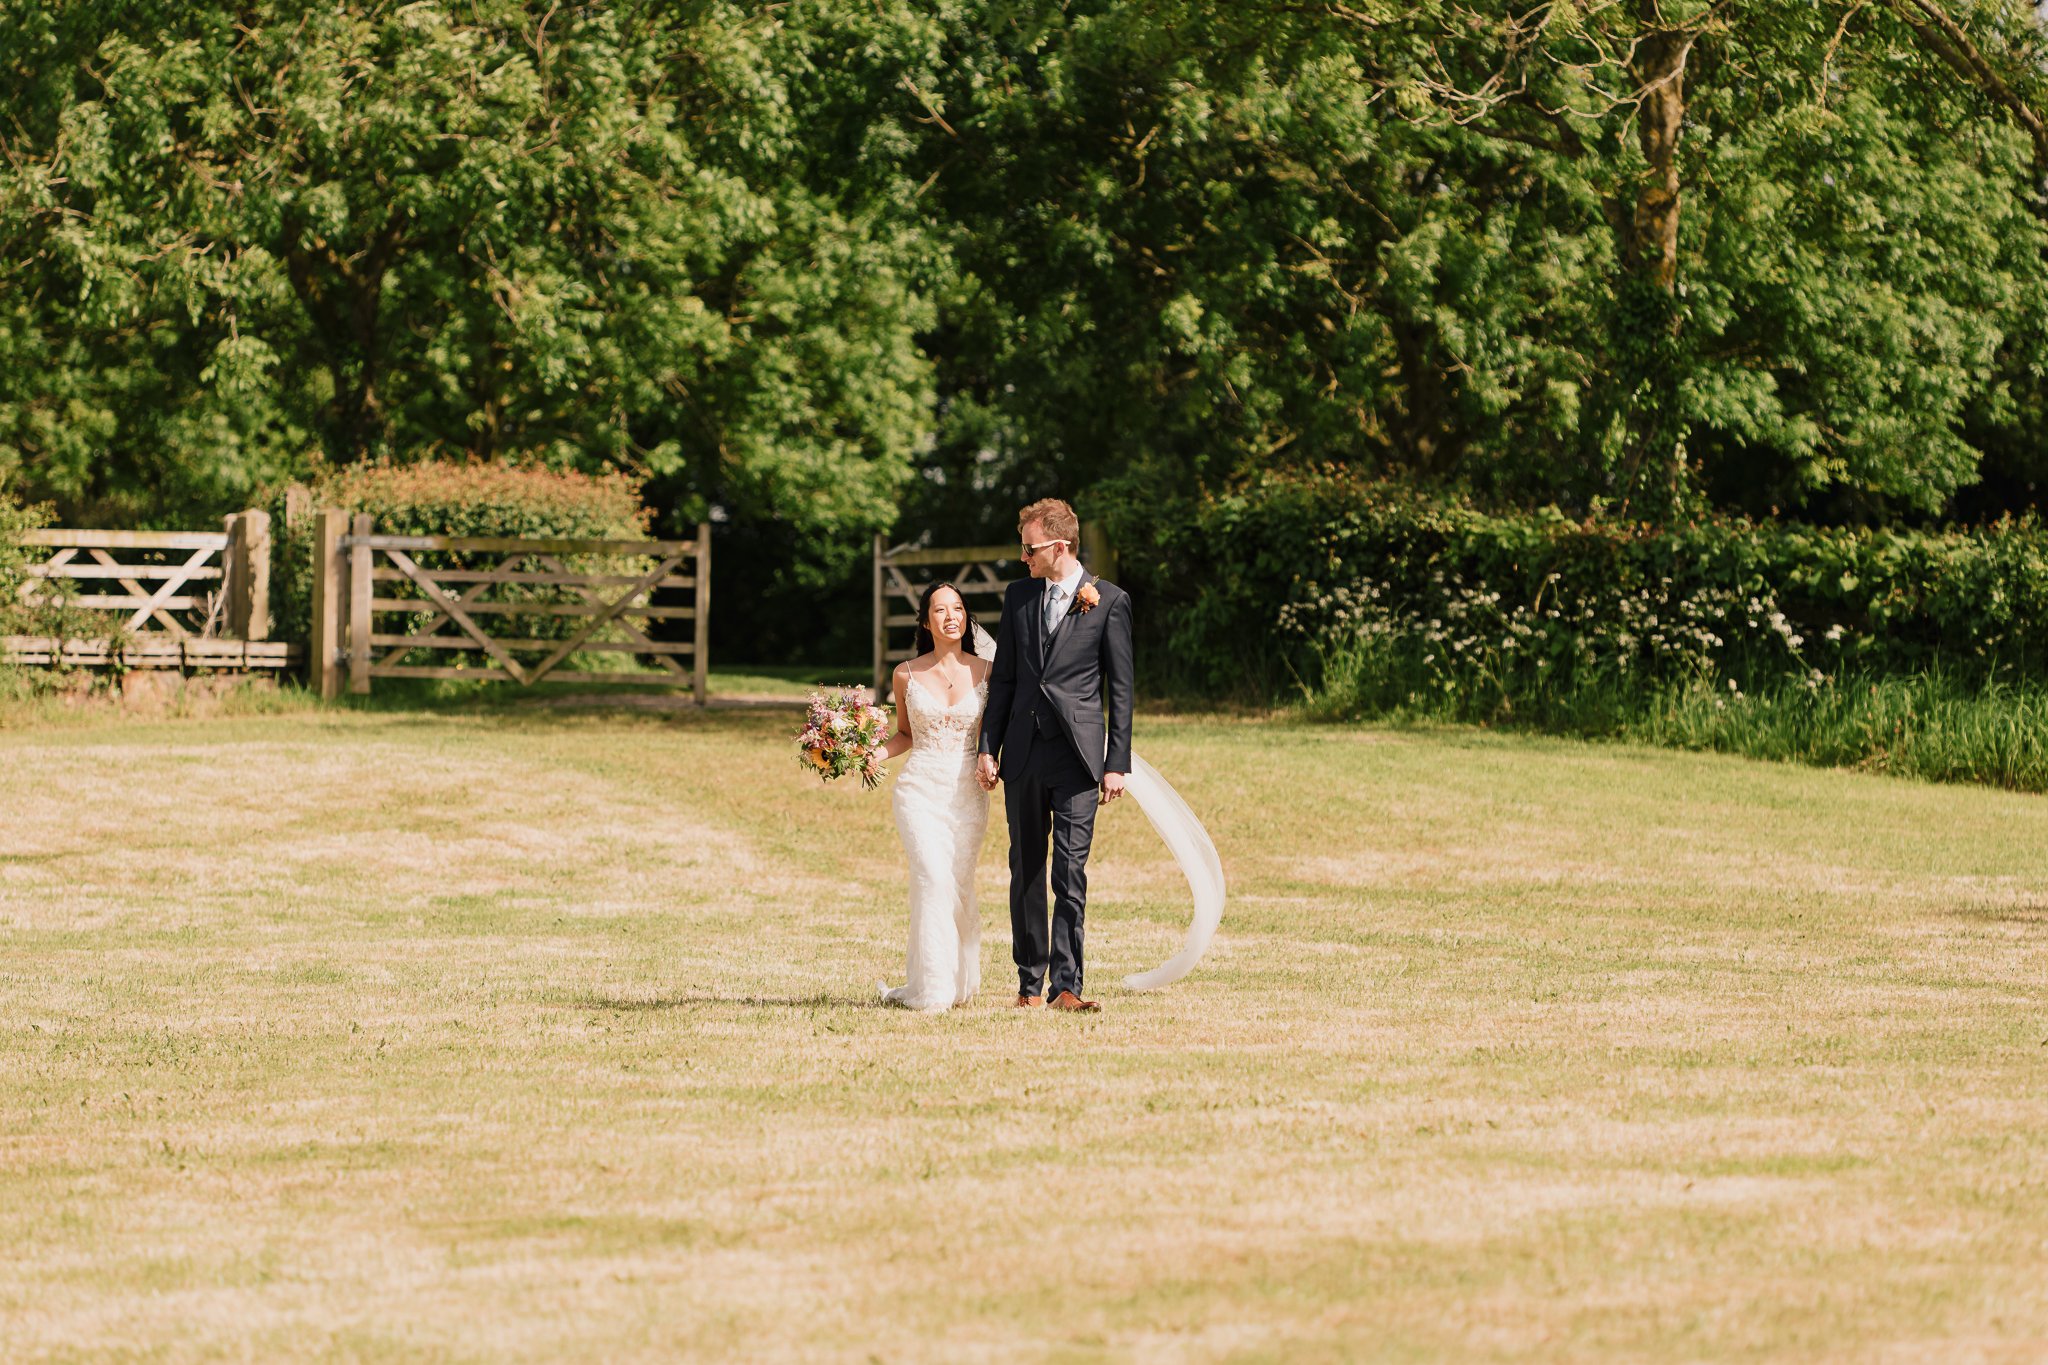 A&J - Wedding at Pennard Hill Farm, Somerset, UK. 4S-112.jpg